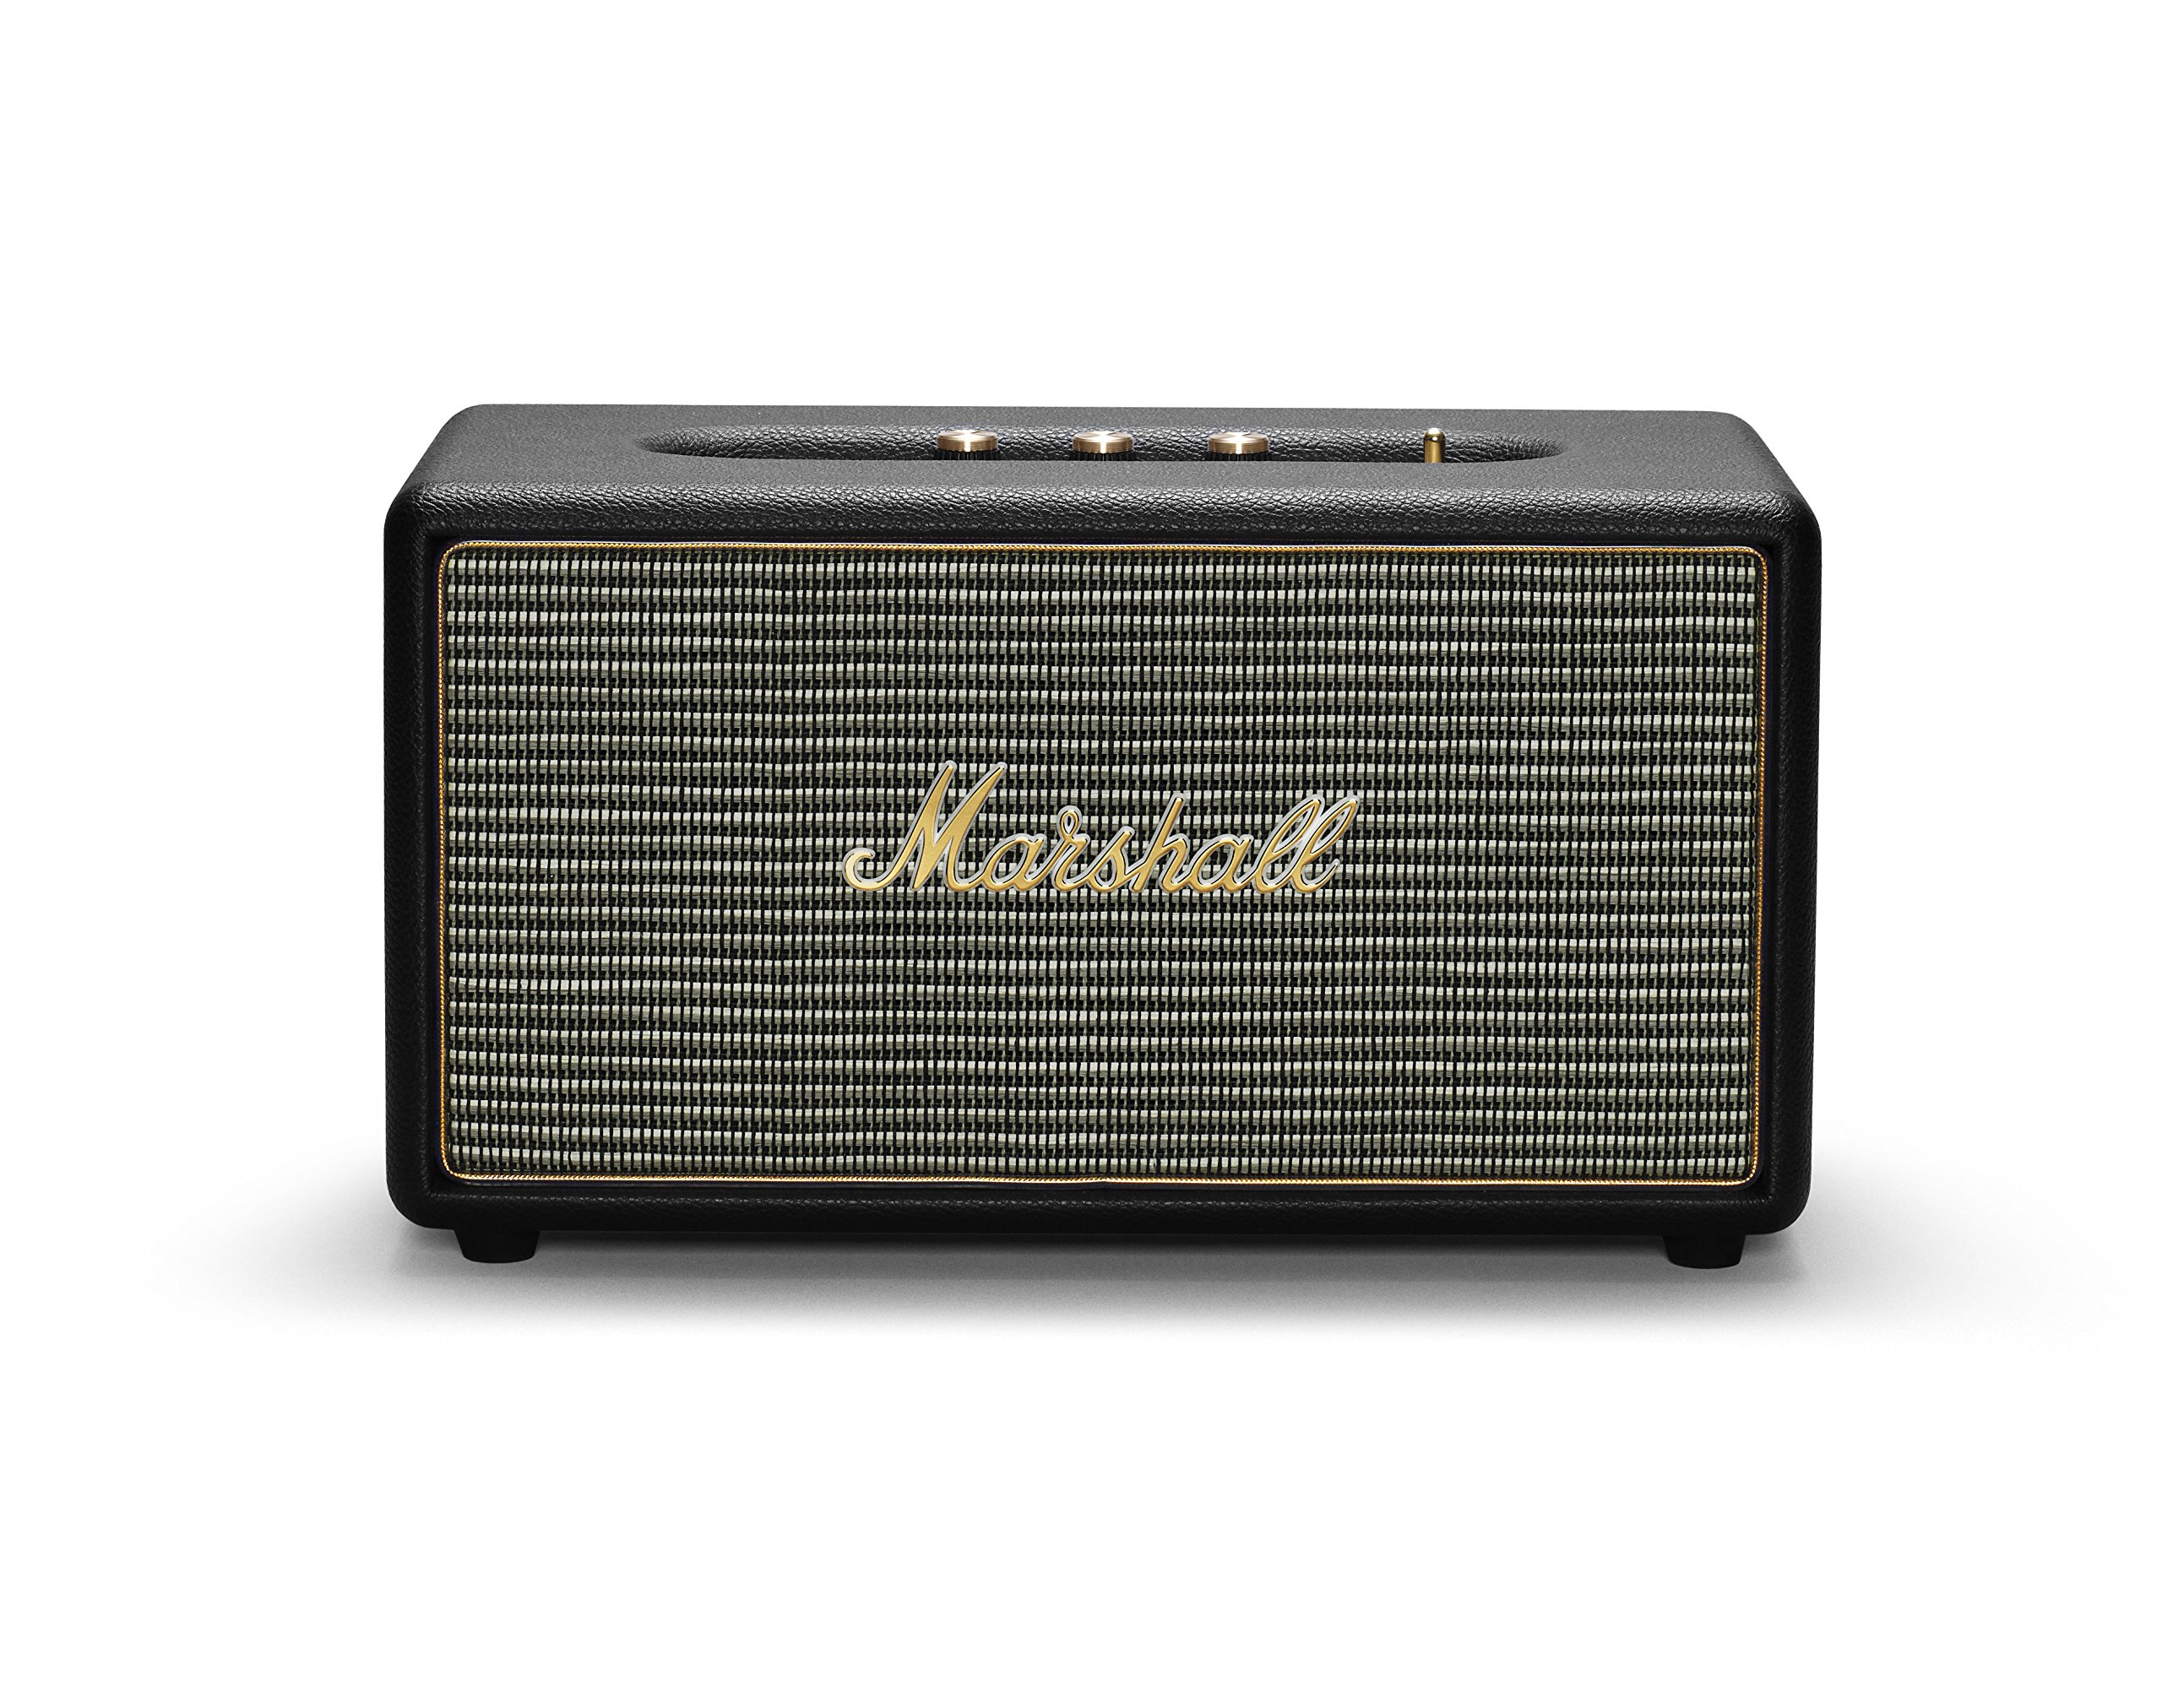 Marshall Stanmore Bluetooth Speaker, Black (04091627)